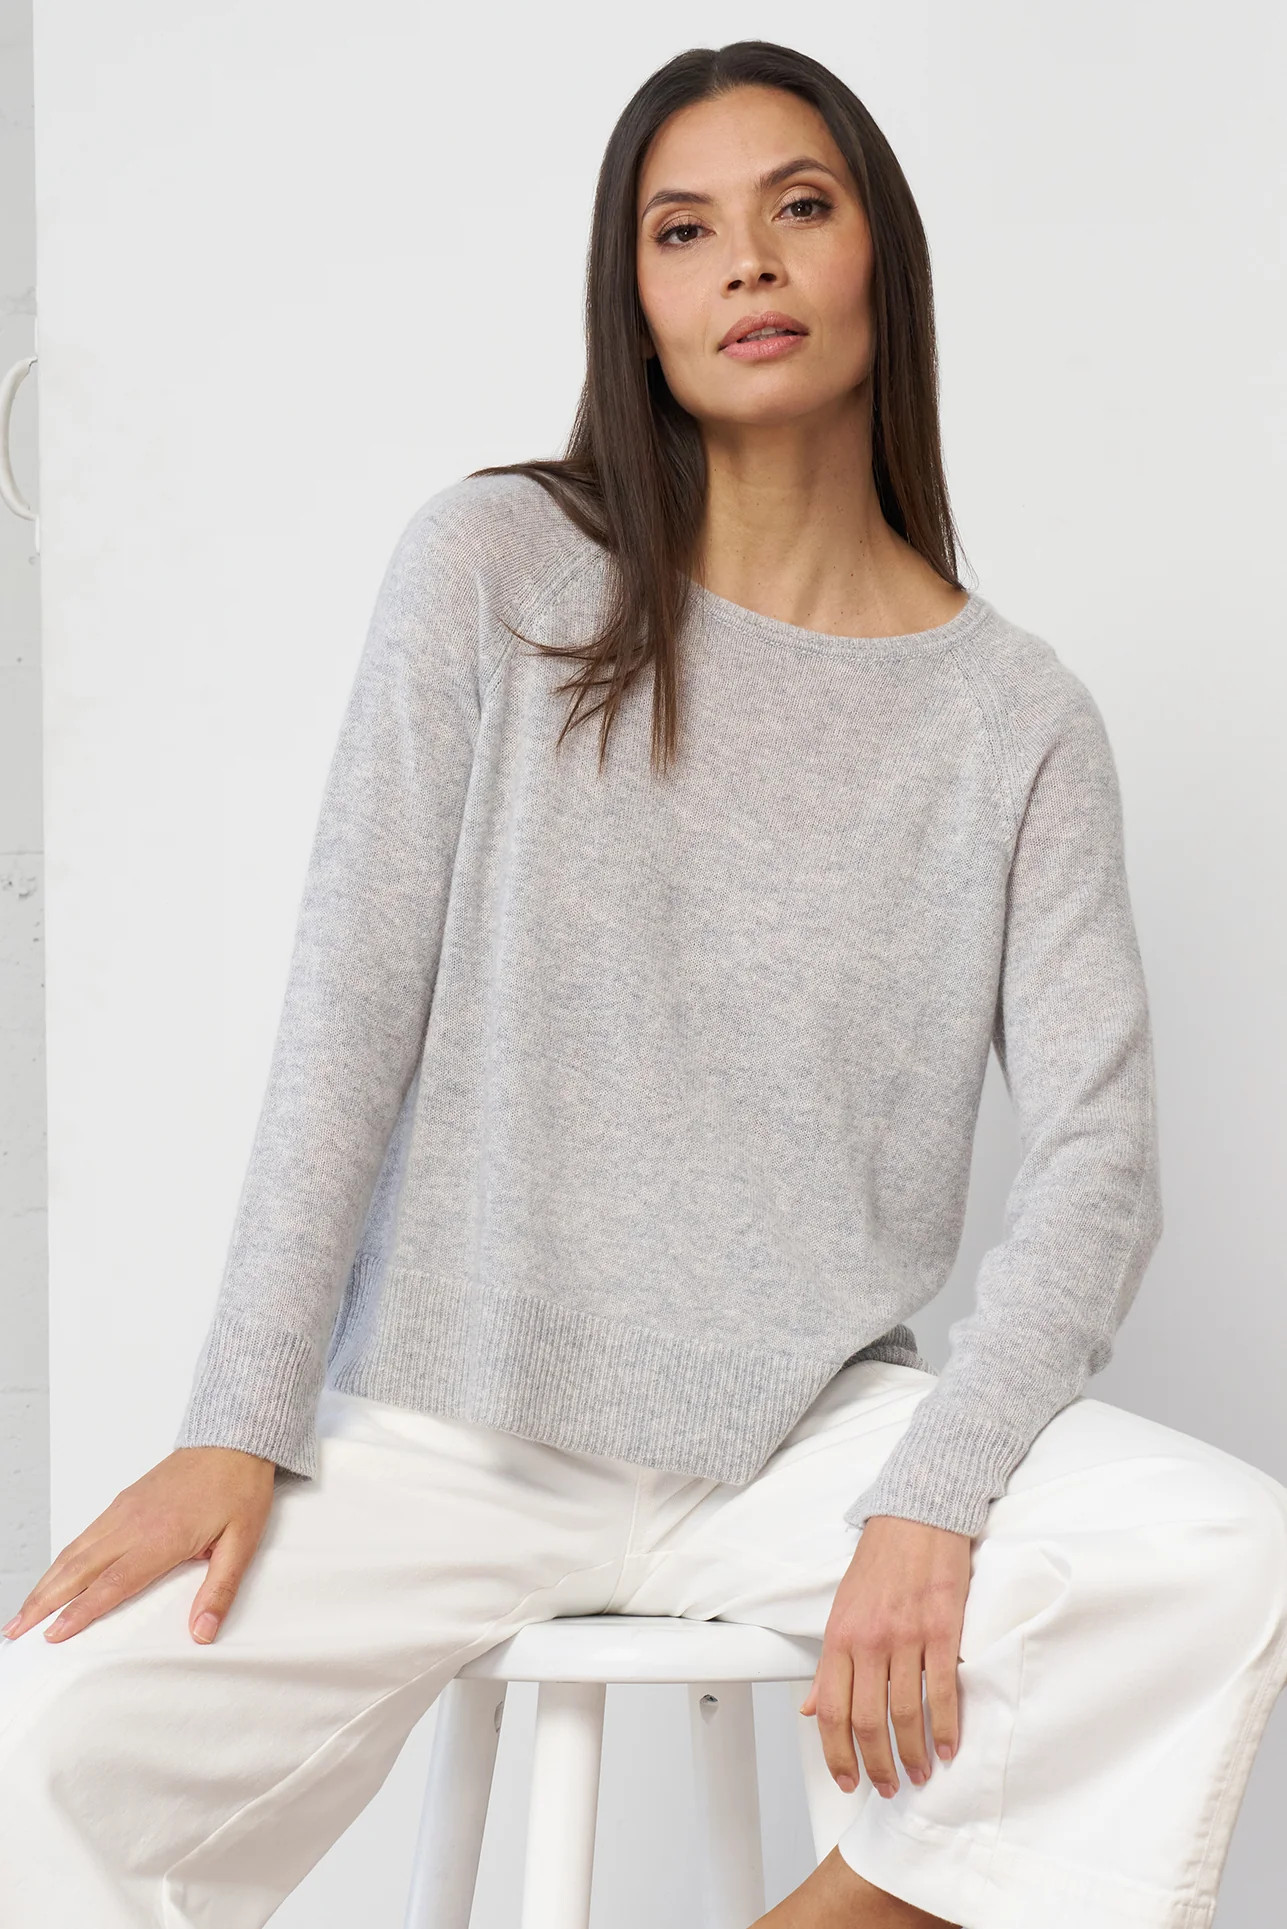 Cashmere Pullover Sweater for Women | Franne Golde | Franne Golde